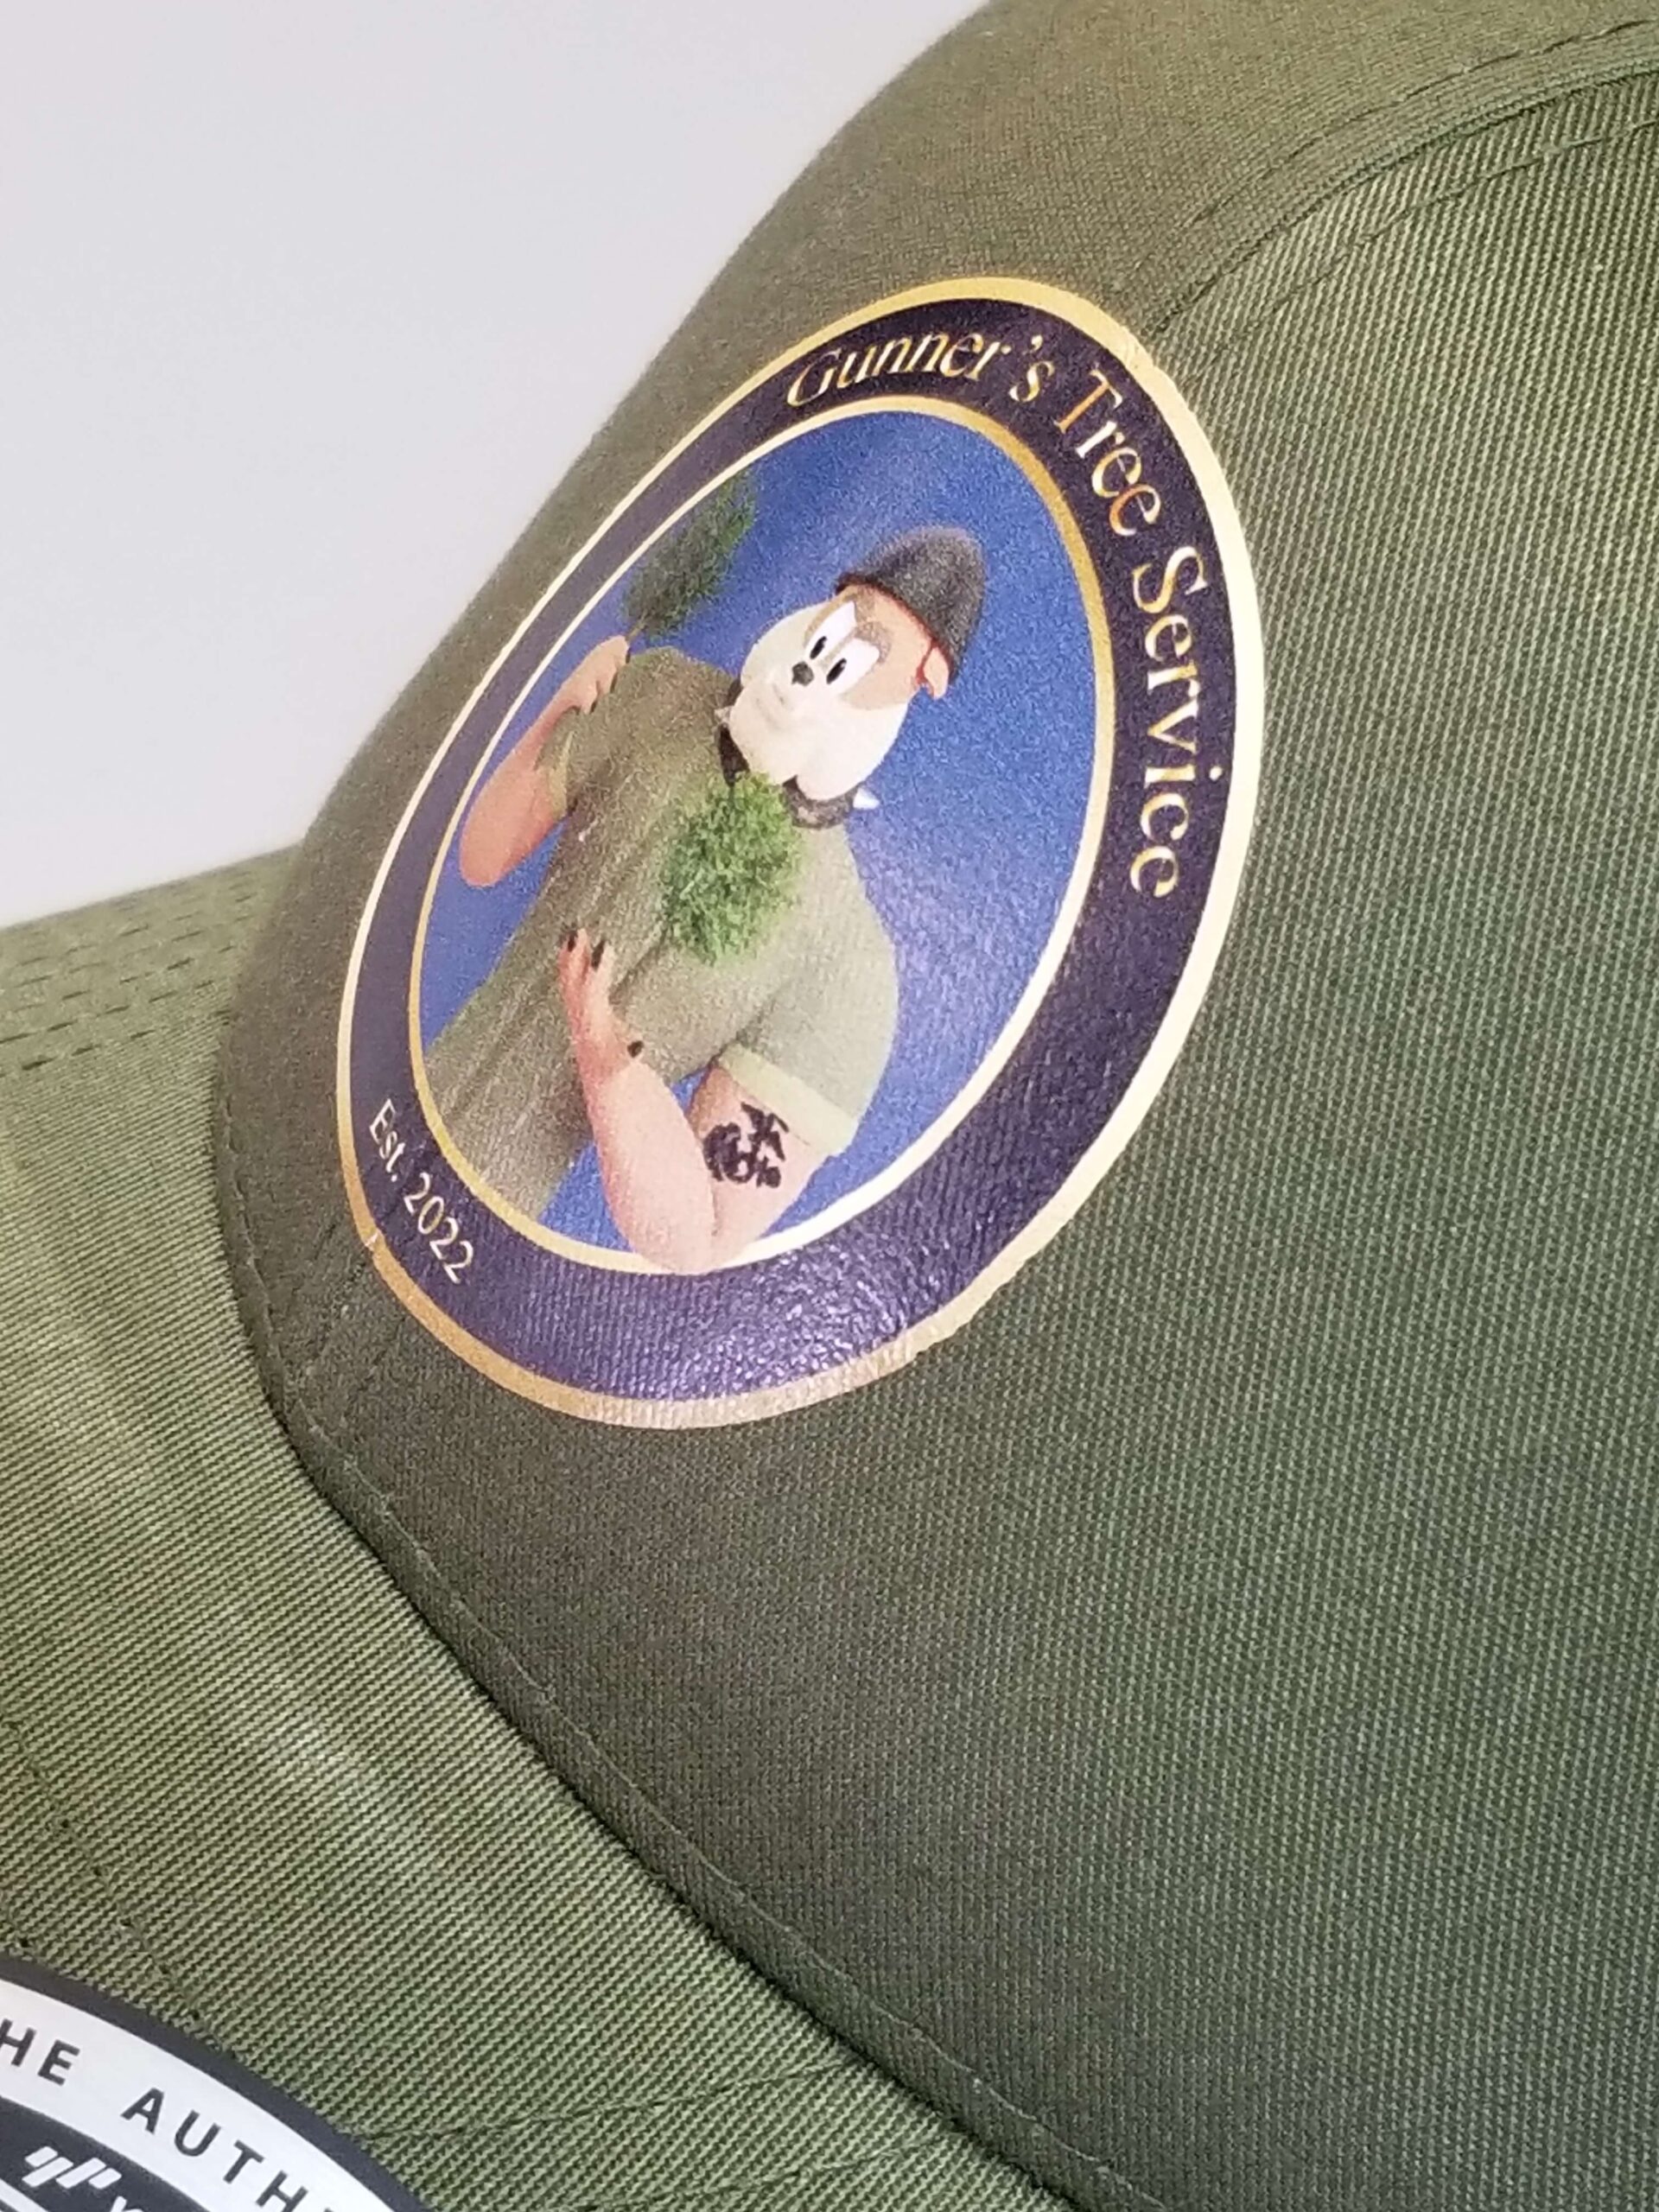 Custom Apparel logo on ball cap